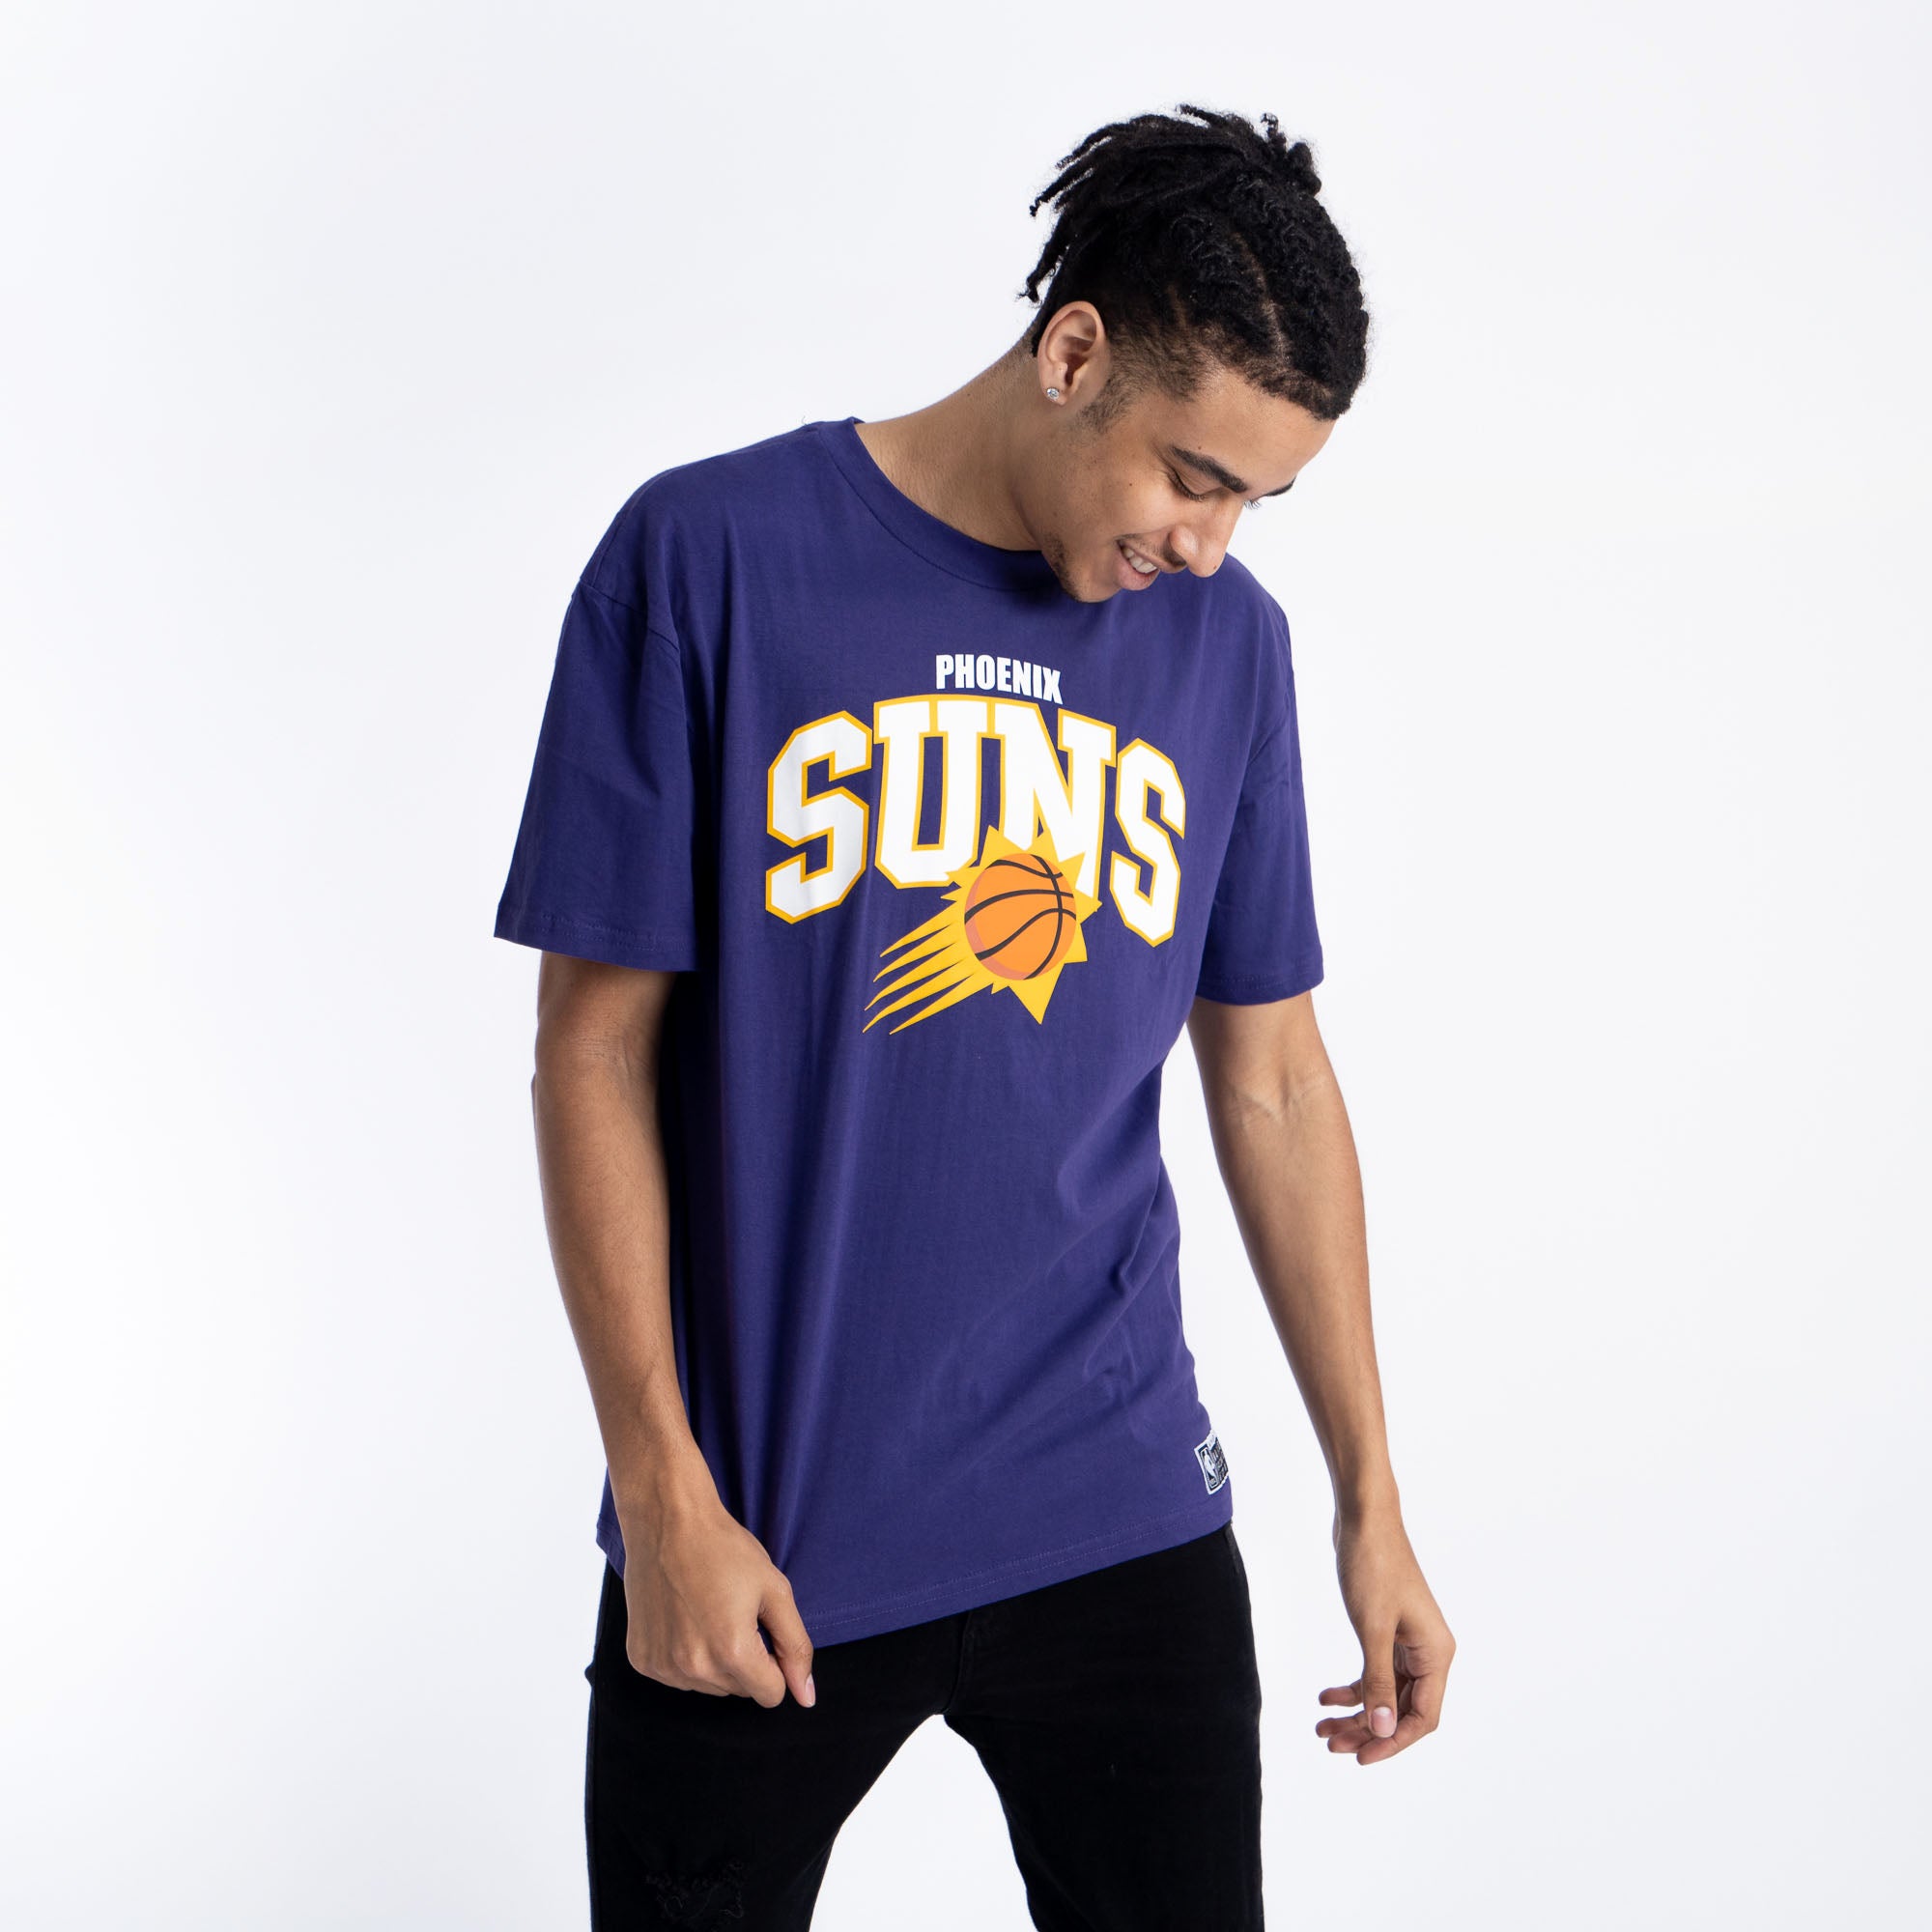 Phoenix Suns T-Shirts in Phoenix Suns Team Shop 